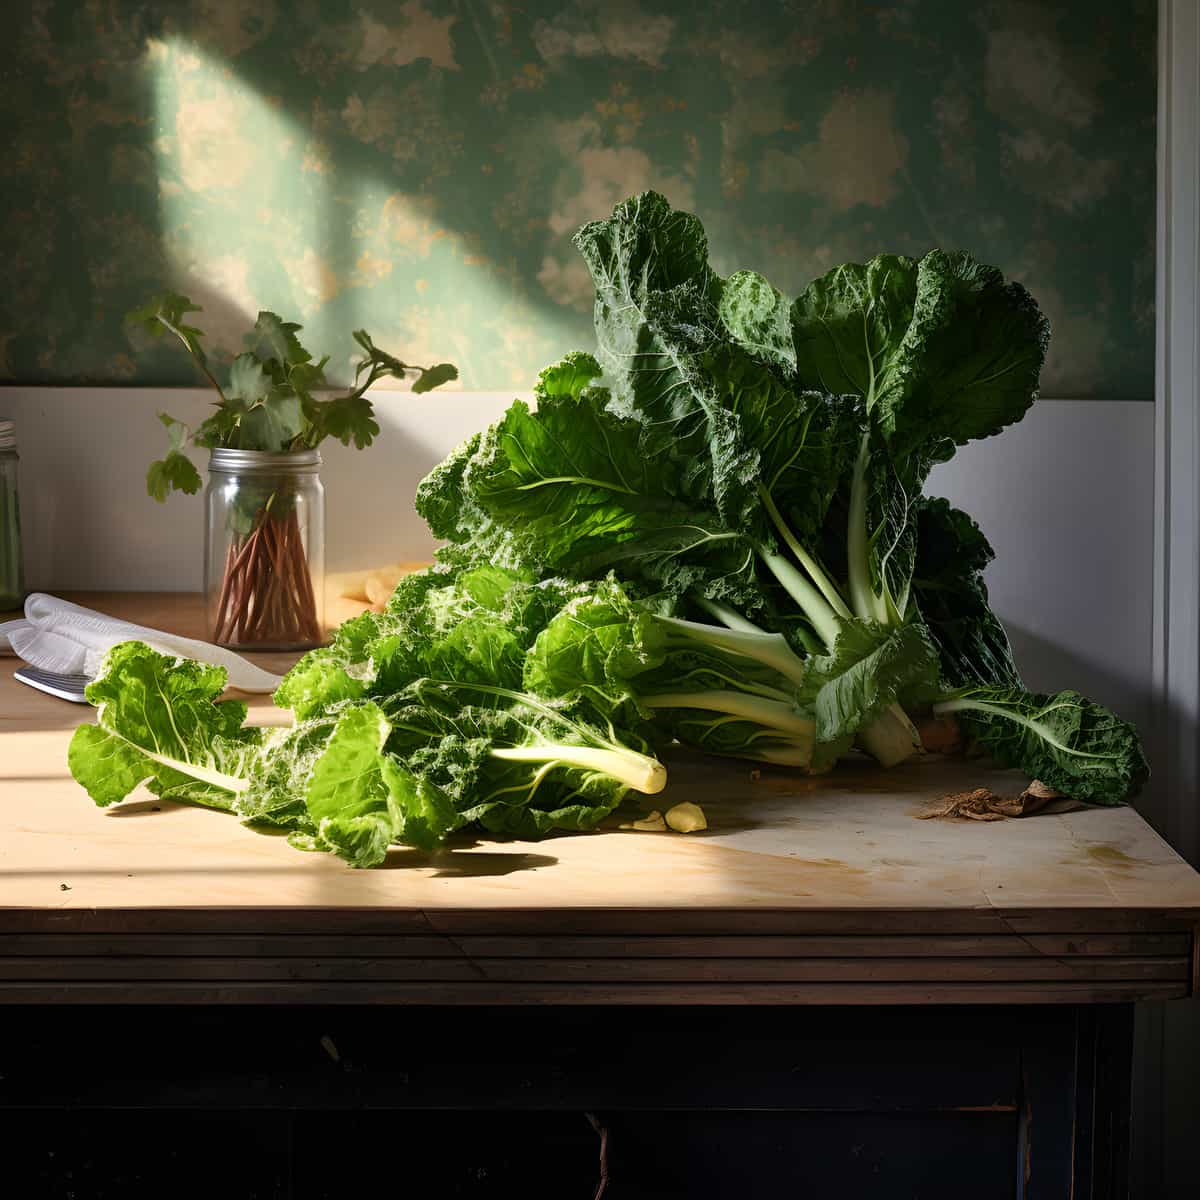 Wild Cabbage on a kitchen counter